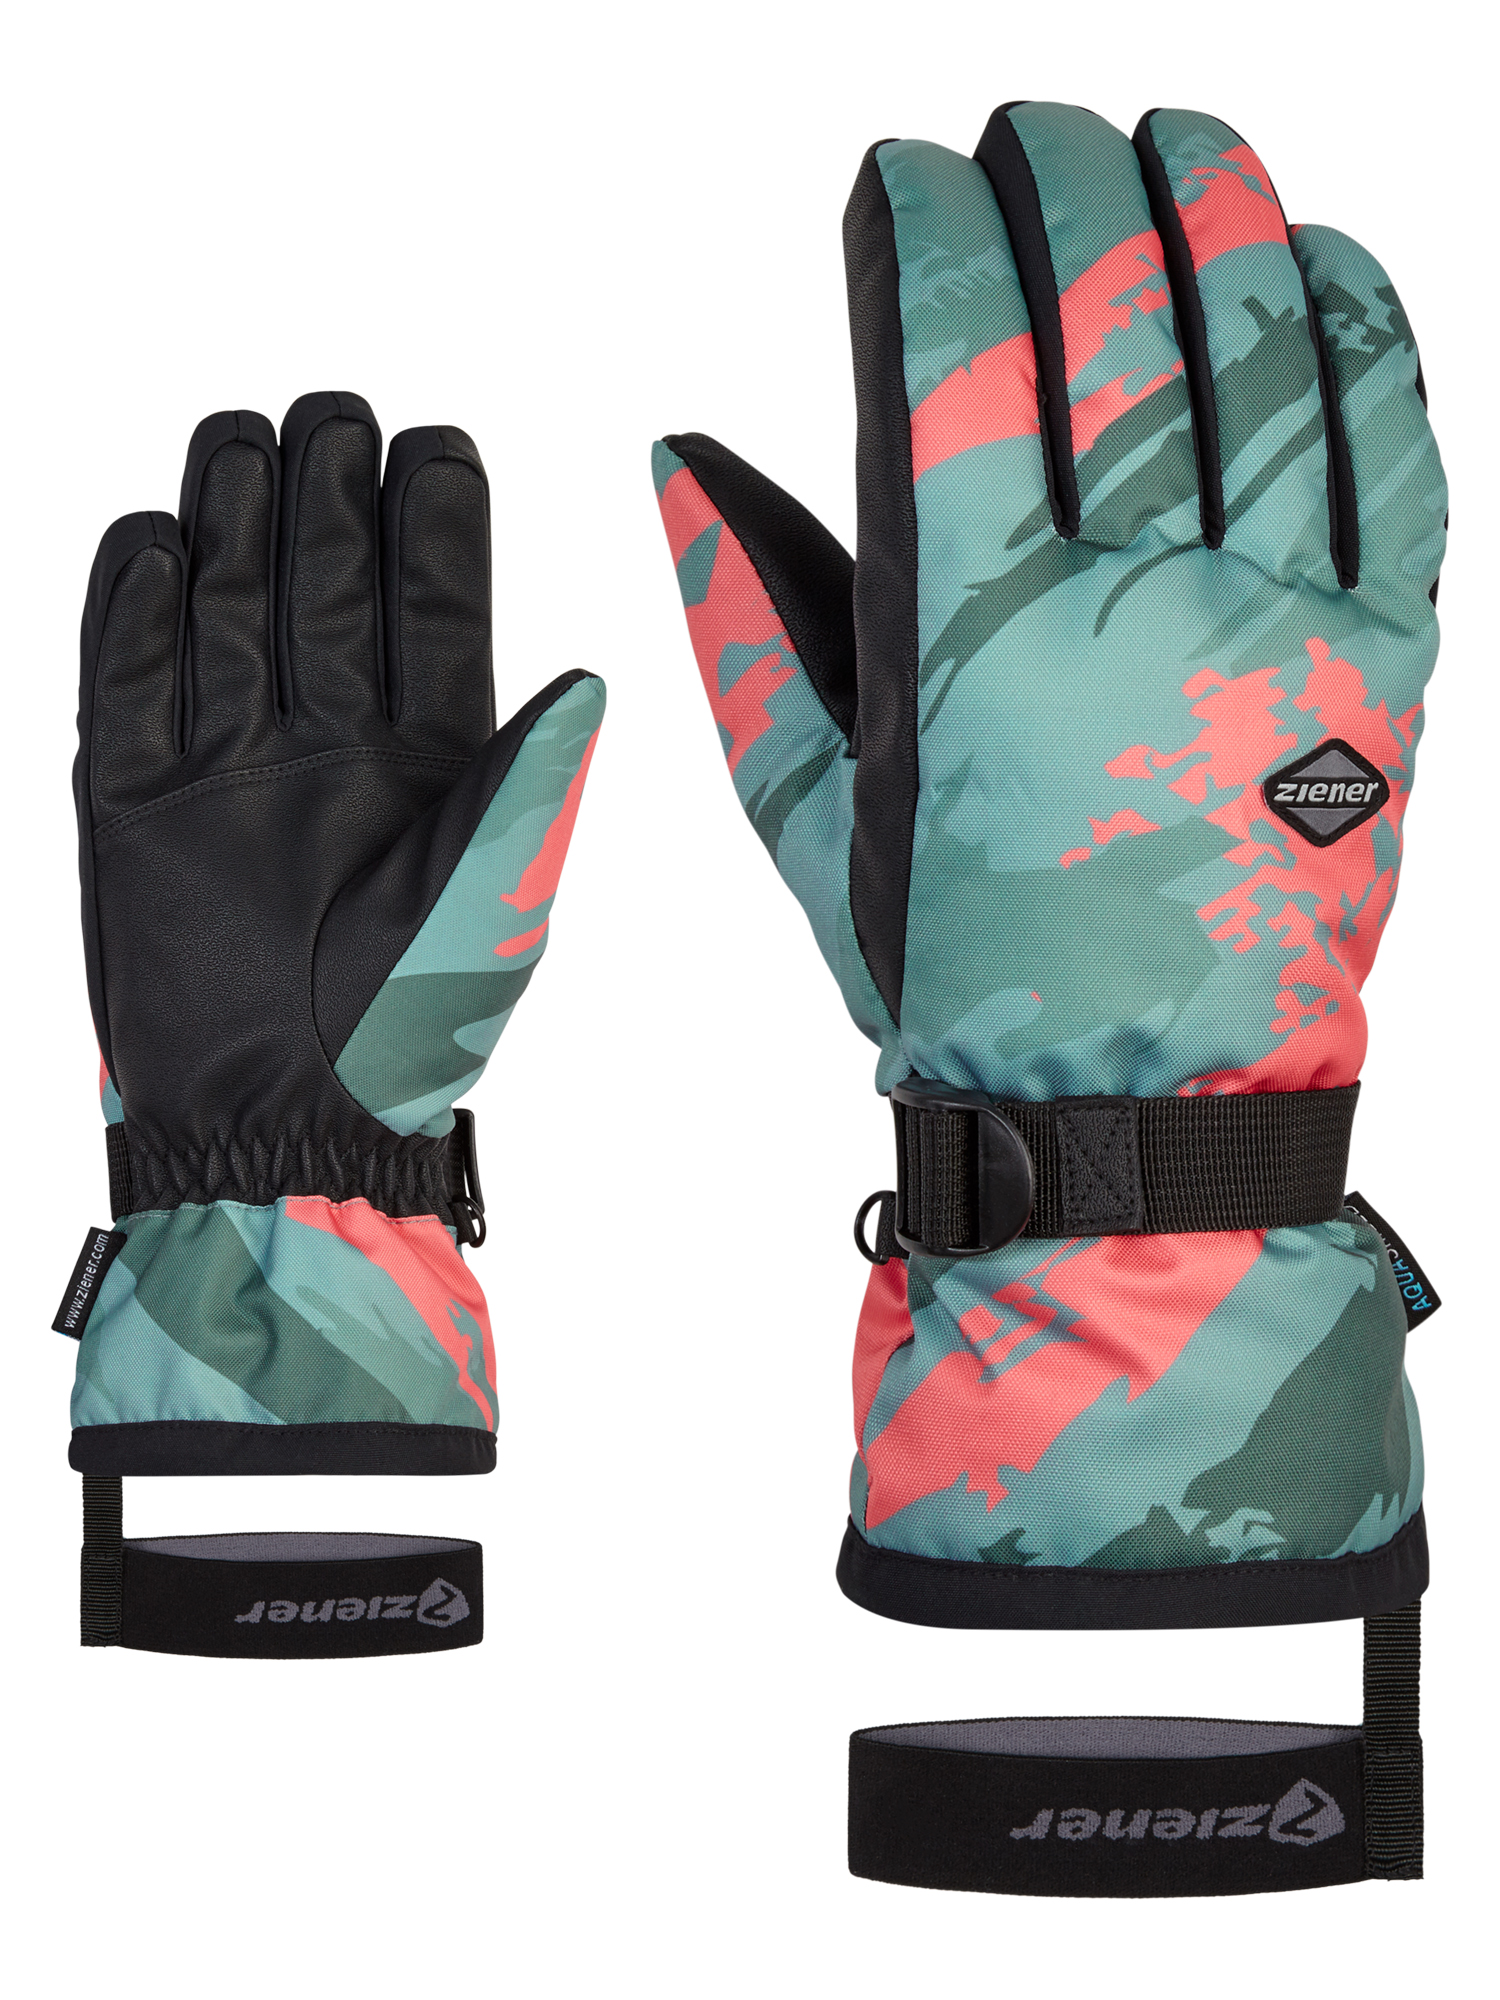 GASSIM AS glove ski alpine - Handschuhe - Artikelnummer: 231000 - 286464  gray seal.vibrant peach